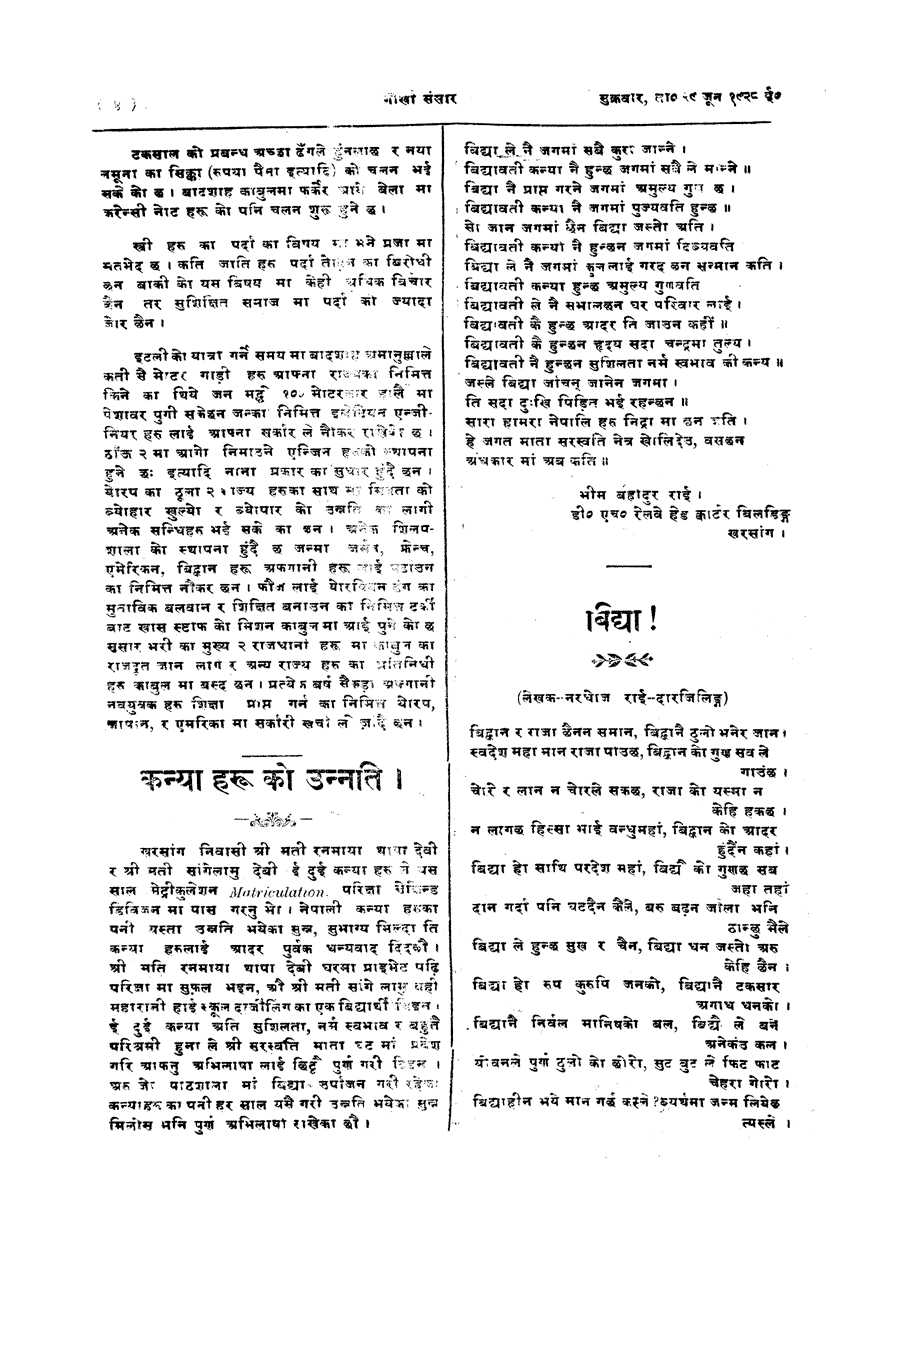 Gorkha Sansar, 29 June 1928, page 4